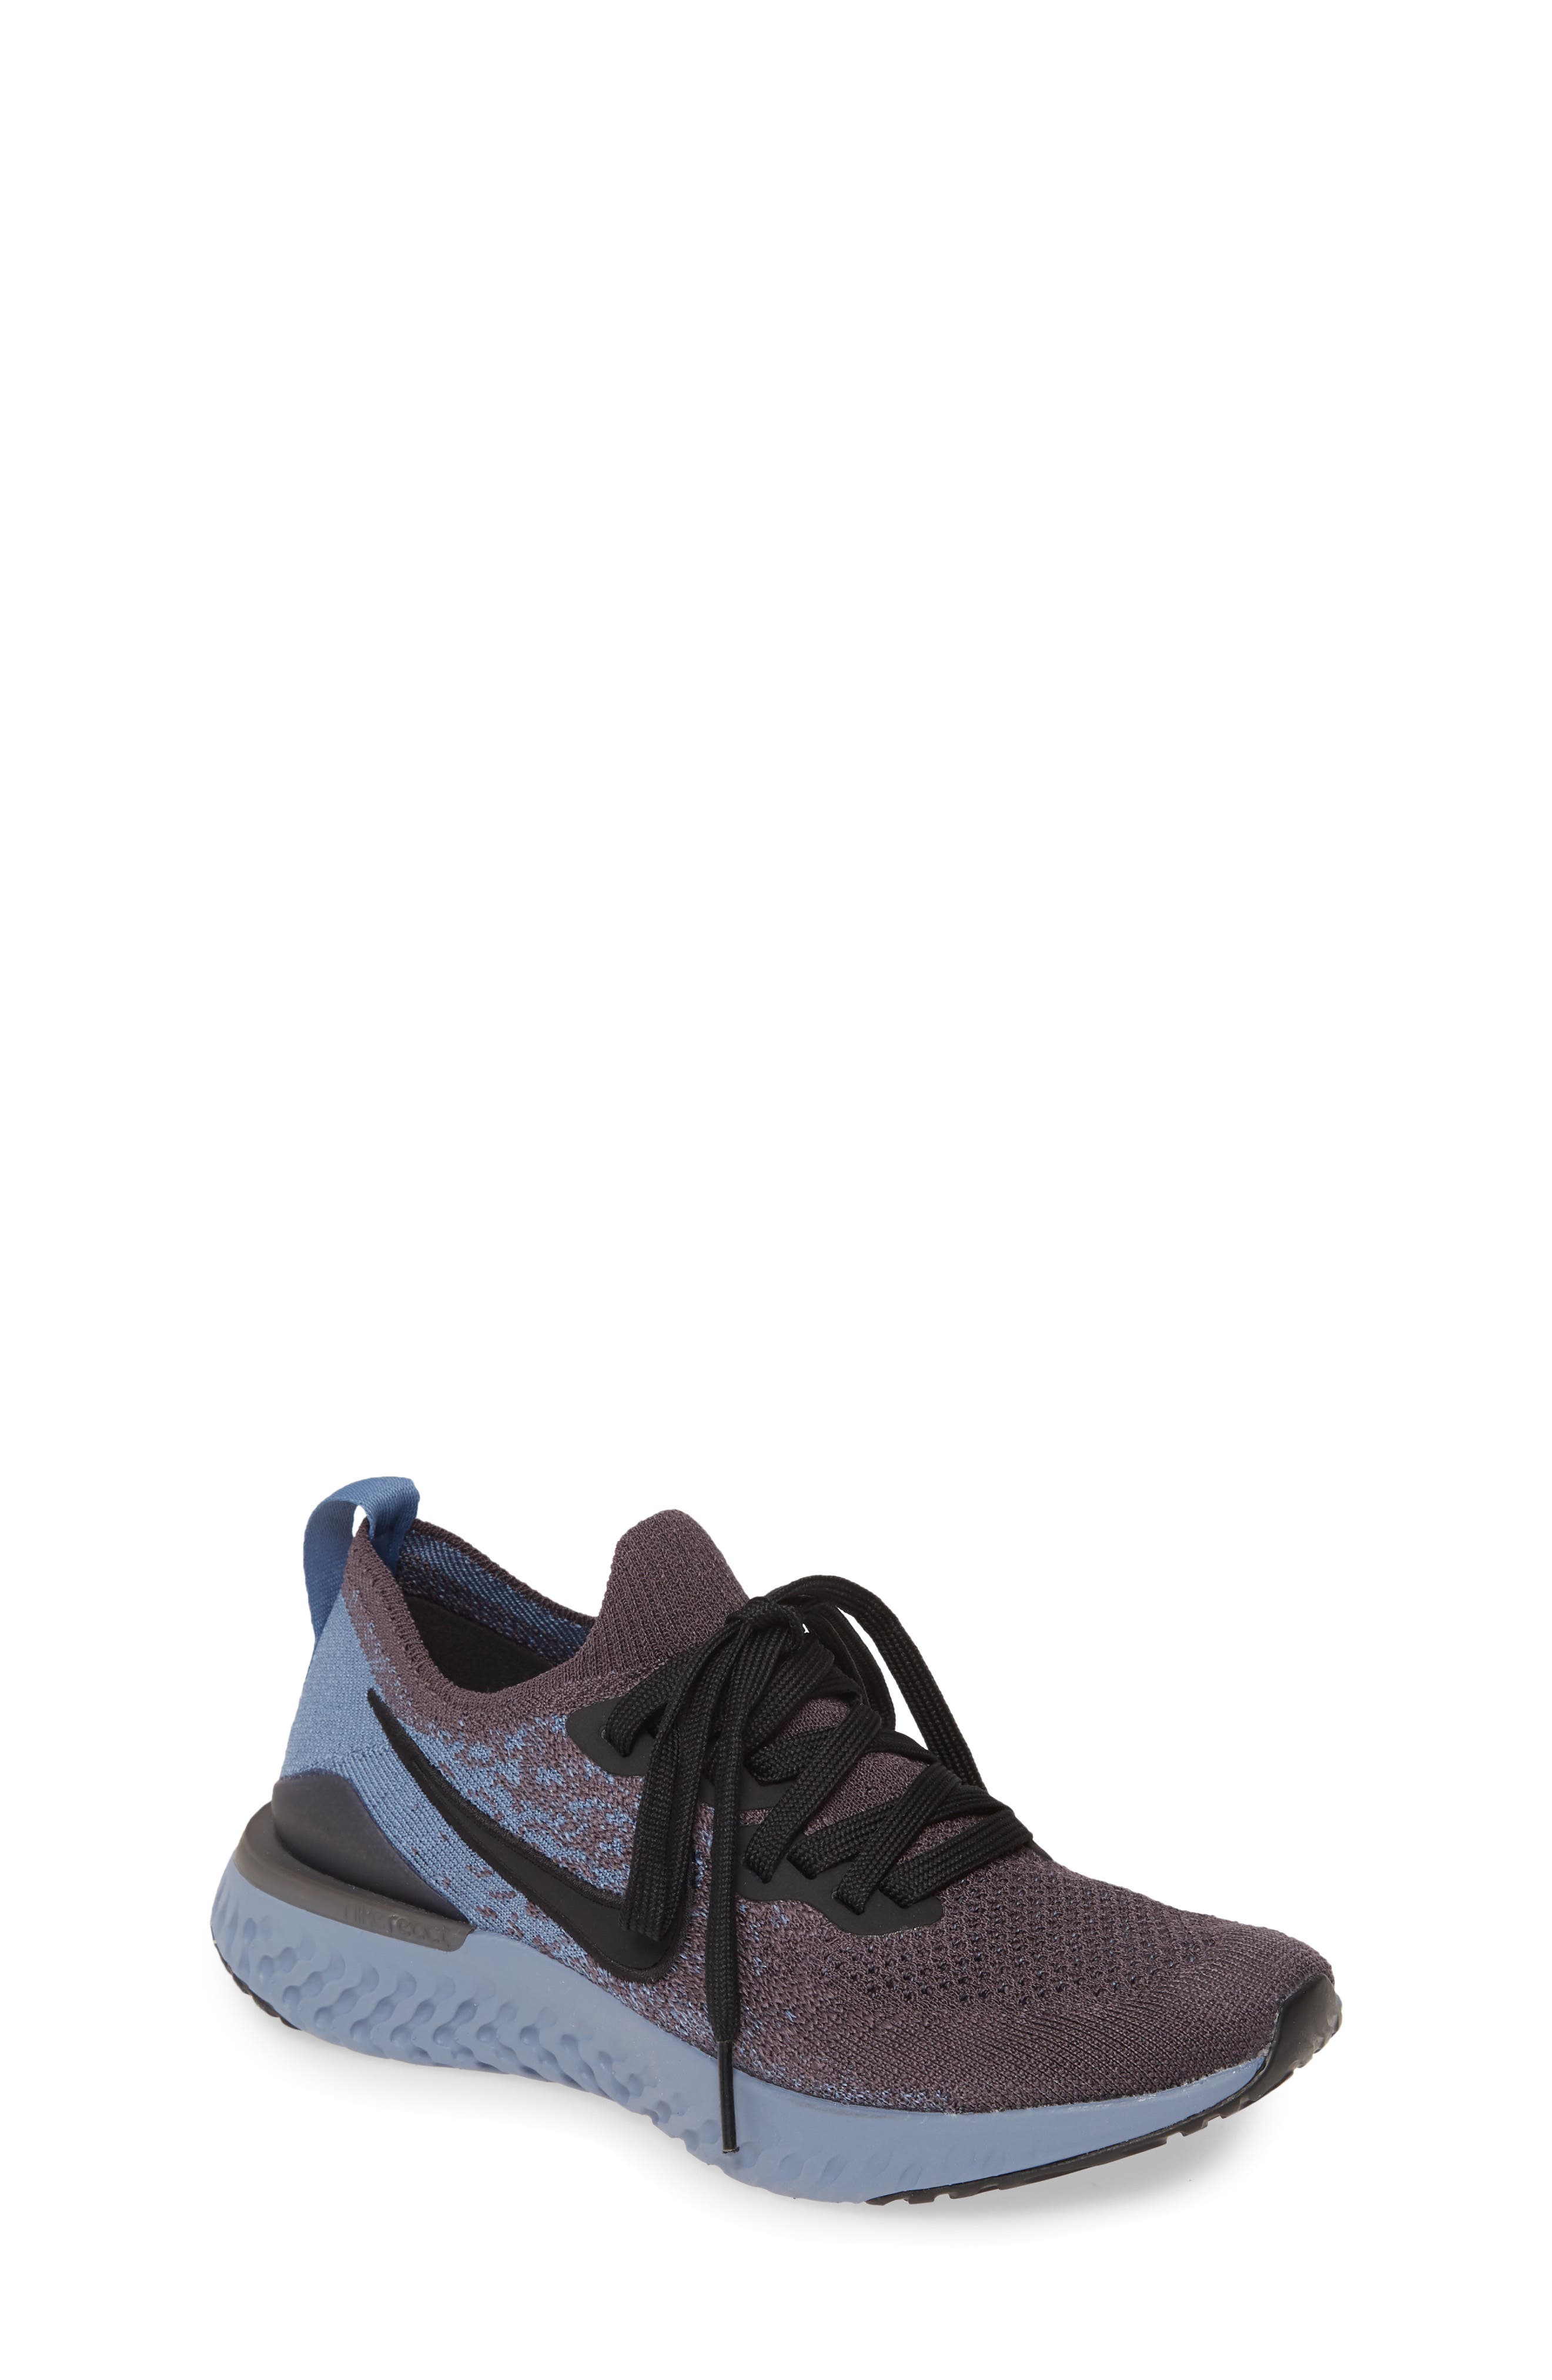 Nike Epic React Flyknit 2 Running Shoe 